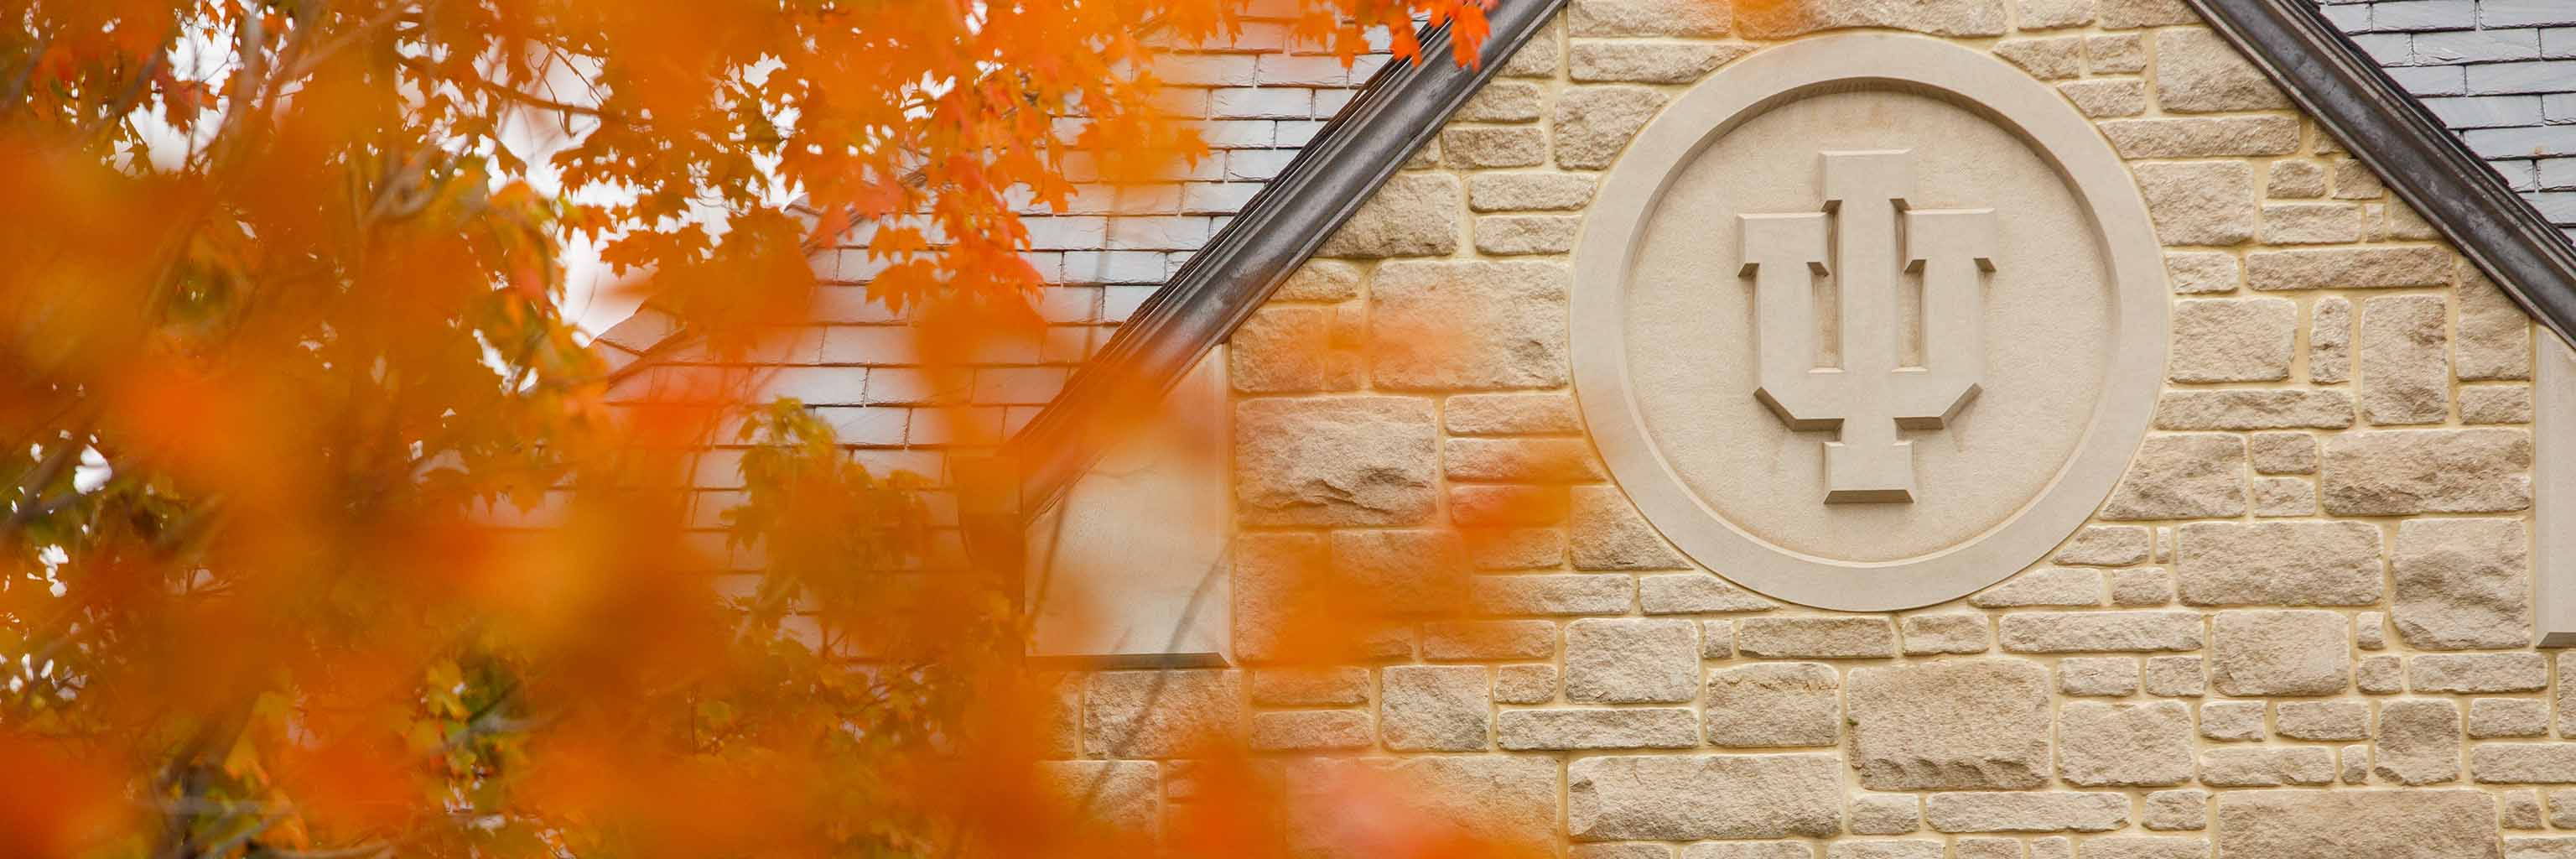 Indiana University carving on building through orange leaves